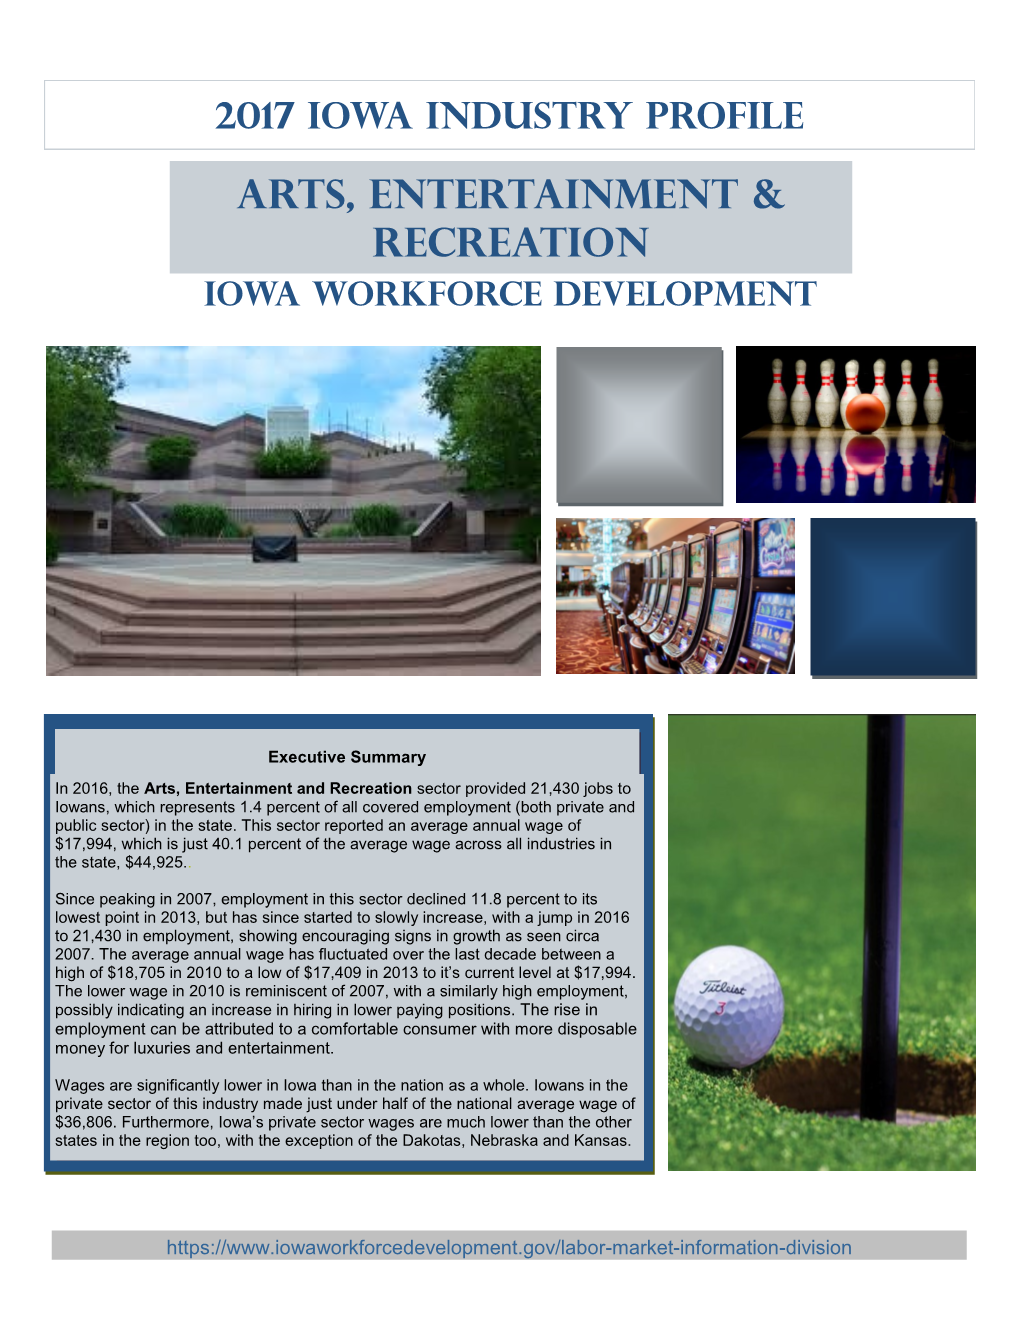 Iowa Arts, Entertainment and Recreation